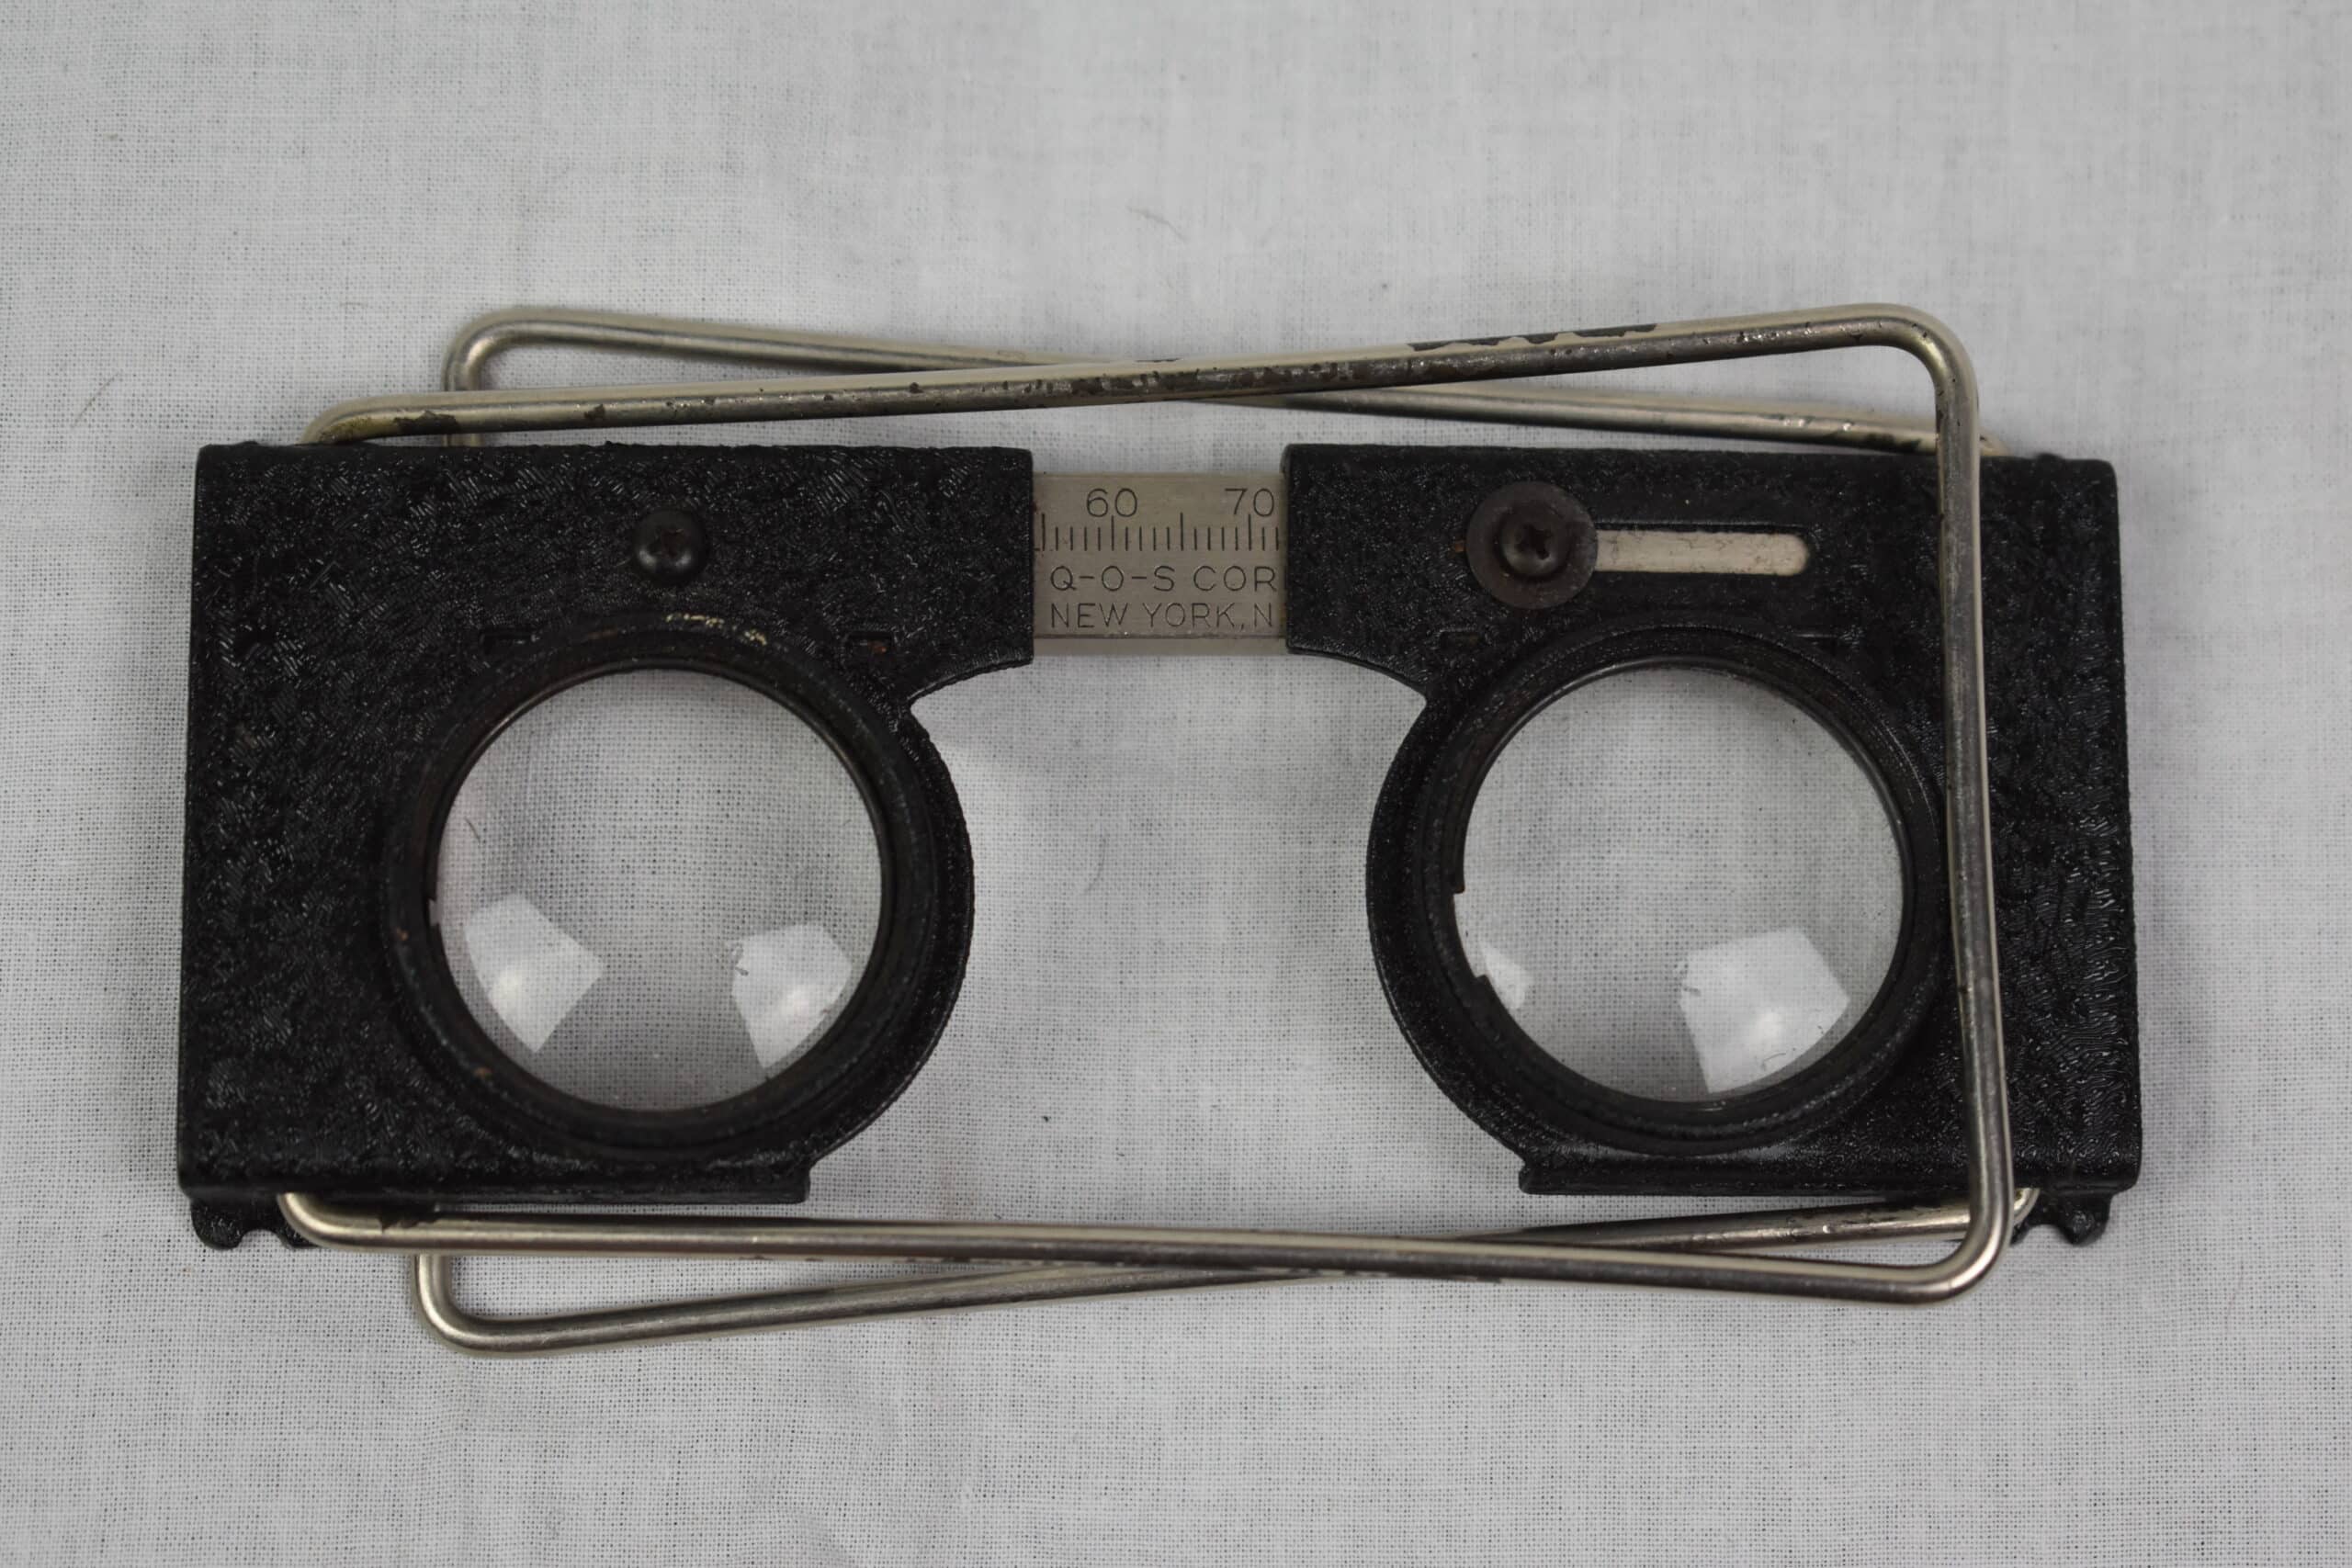 Lunette de lecture stéréoscope, Folding Aerial Photo Map Stereoscope Reader Glasses